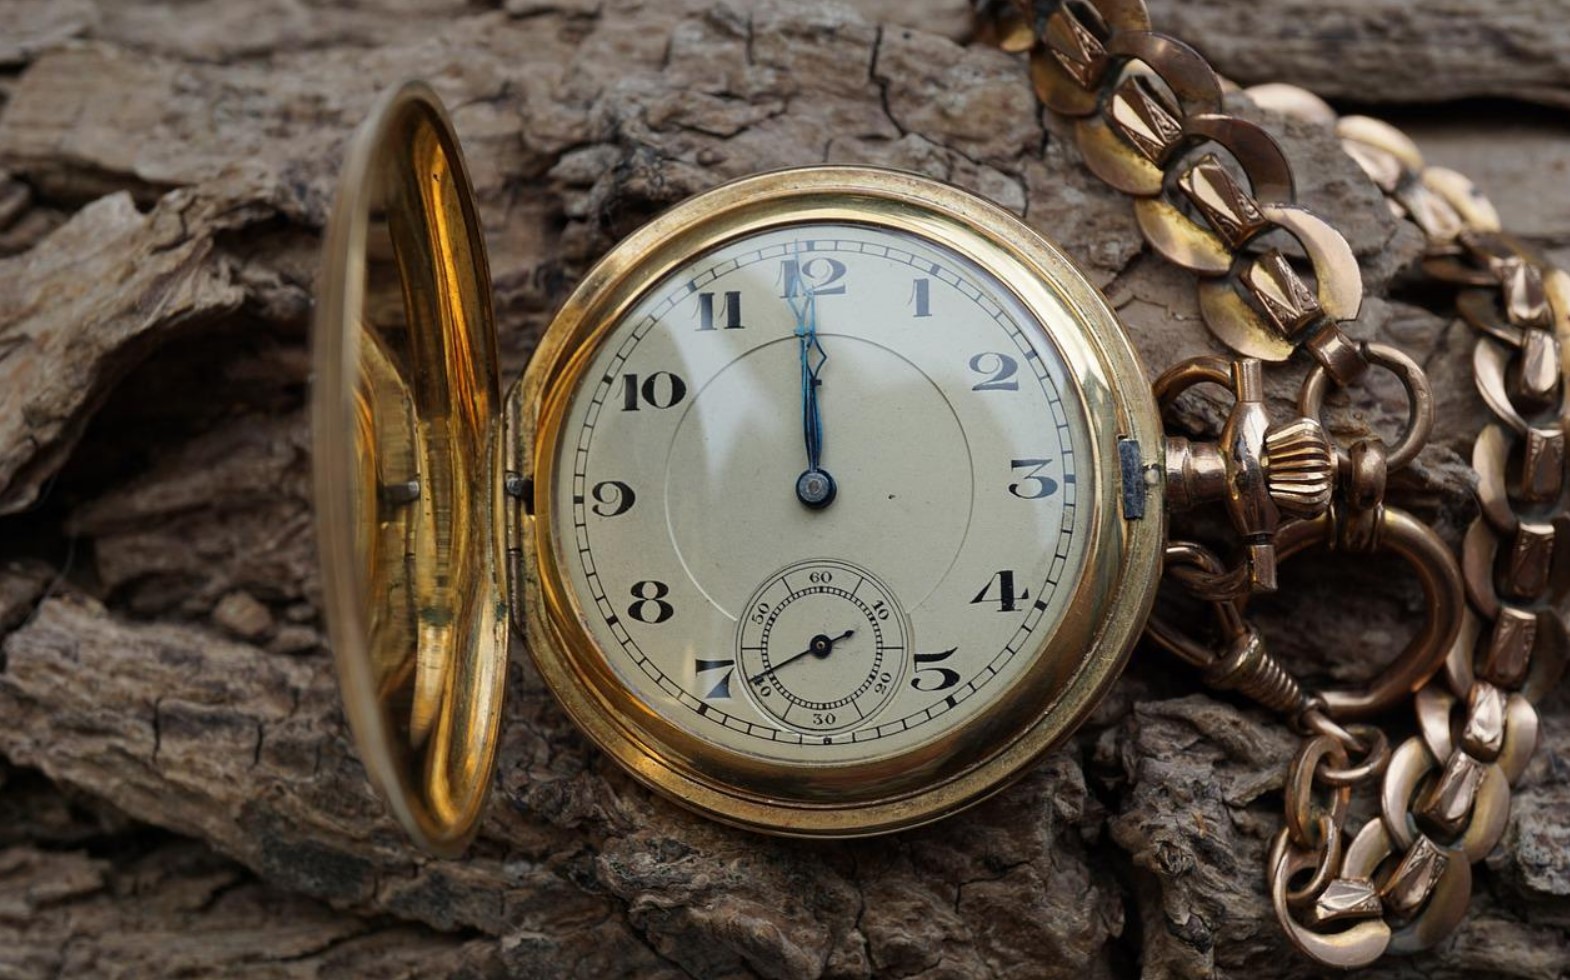 Картинку про часы. Старинные часы. Древние часы. Механические часы старинные. Красивые часы.